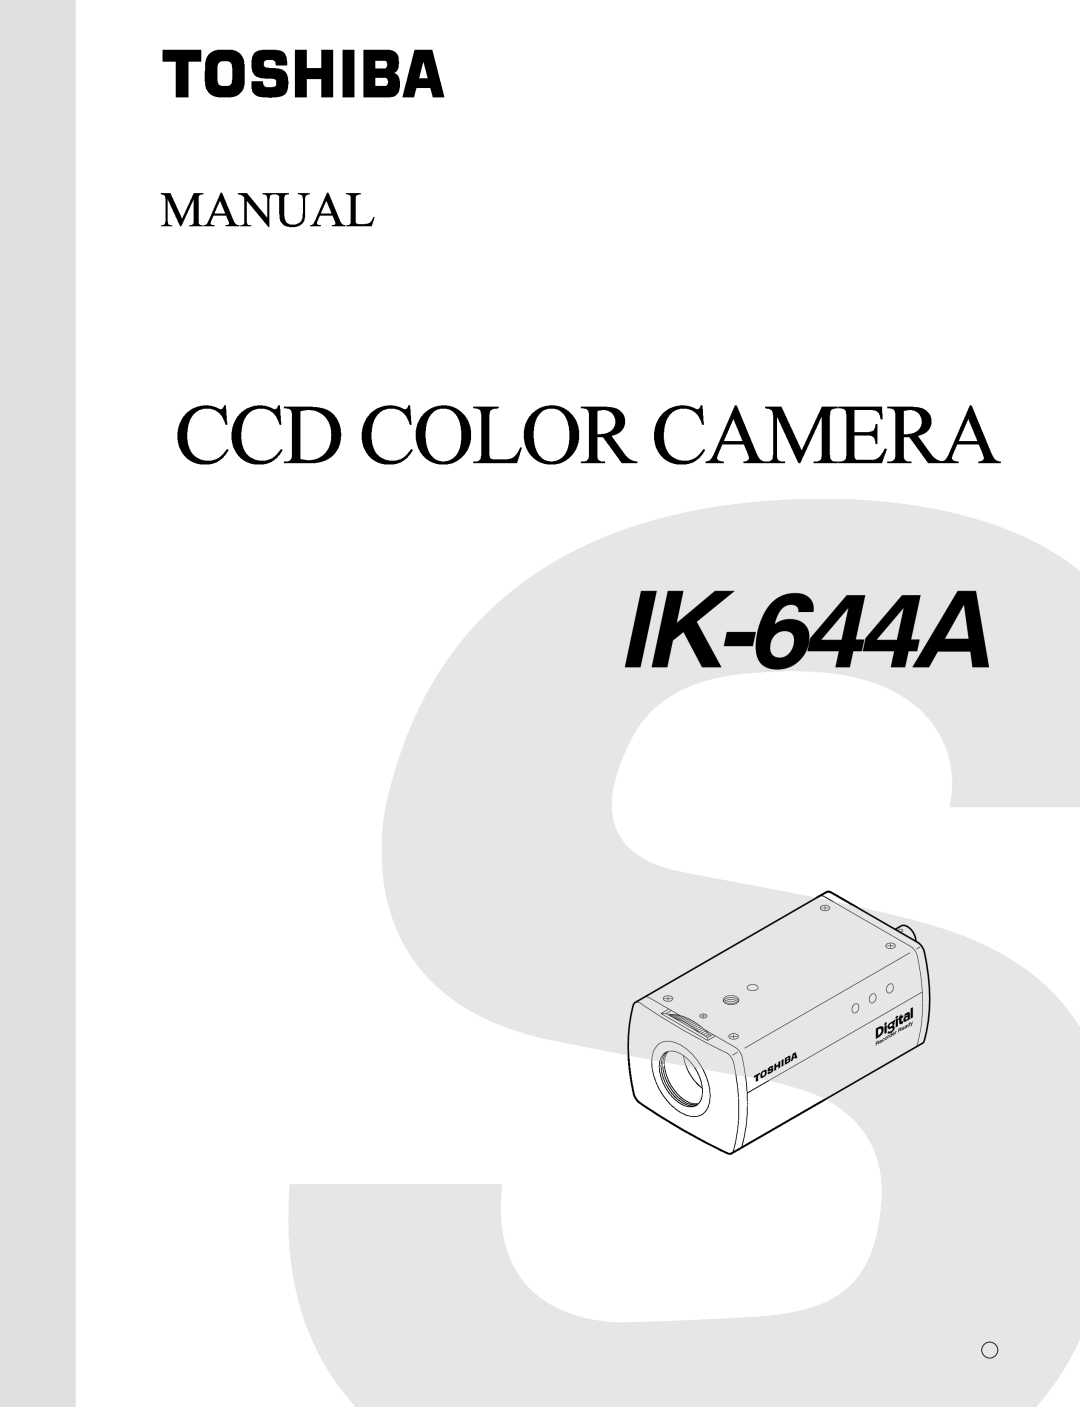 Toshiba IK-644A manual Ccd Color Camera, Manual 